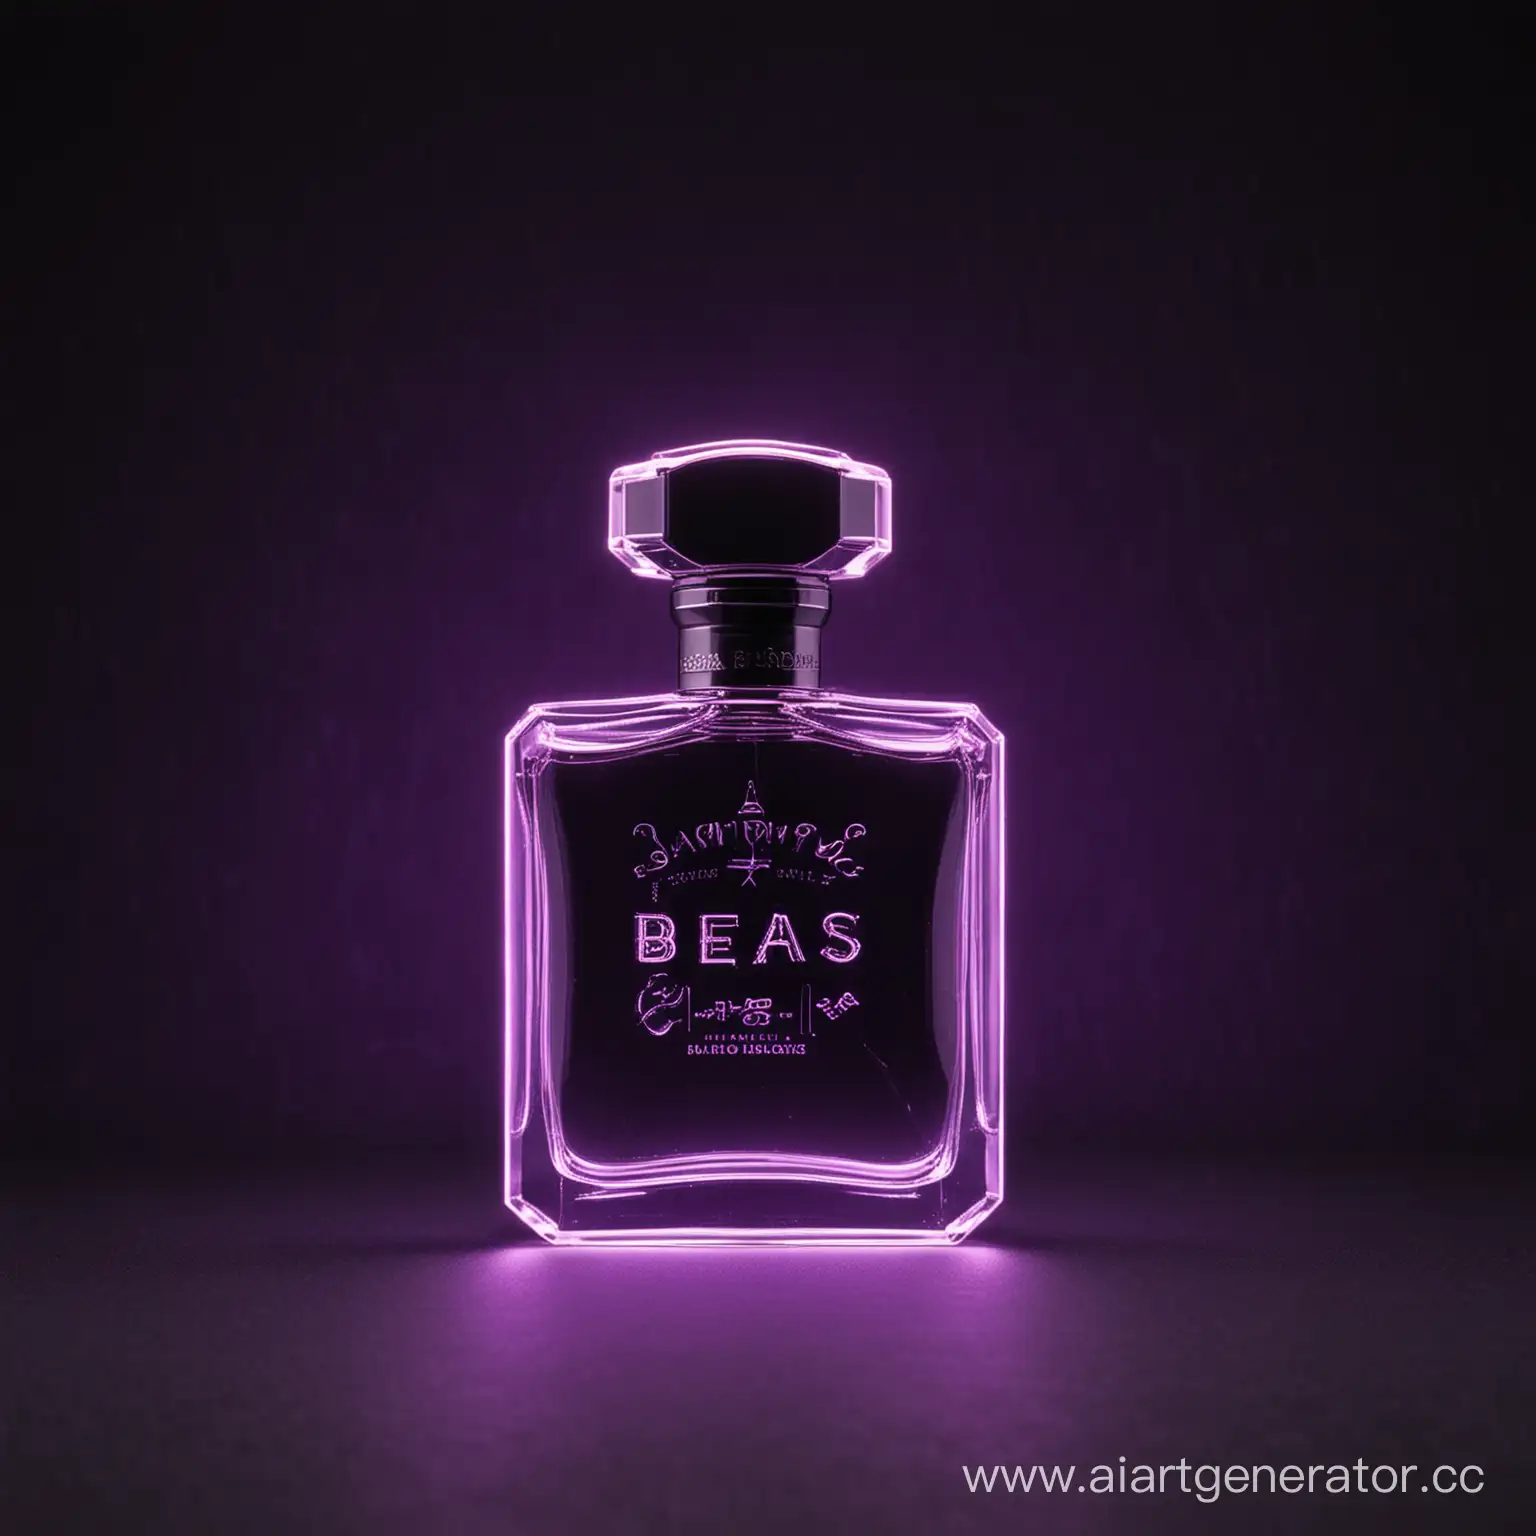 Beas-Perfume-Shop-Logo-in-Purple-Neon-Glow-on-Black-Background